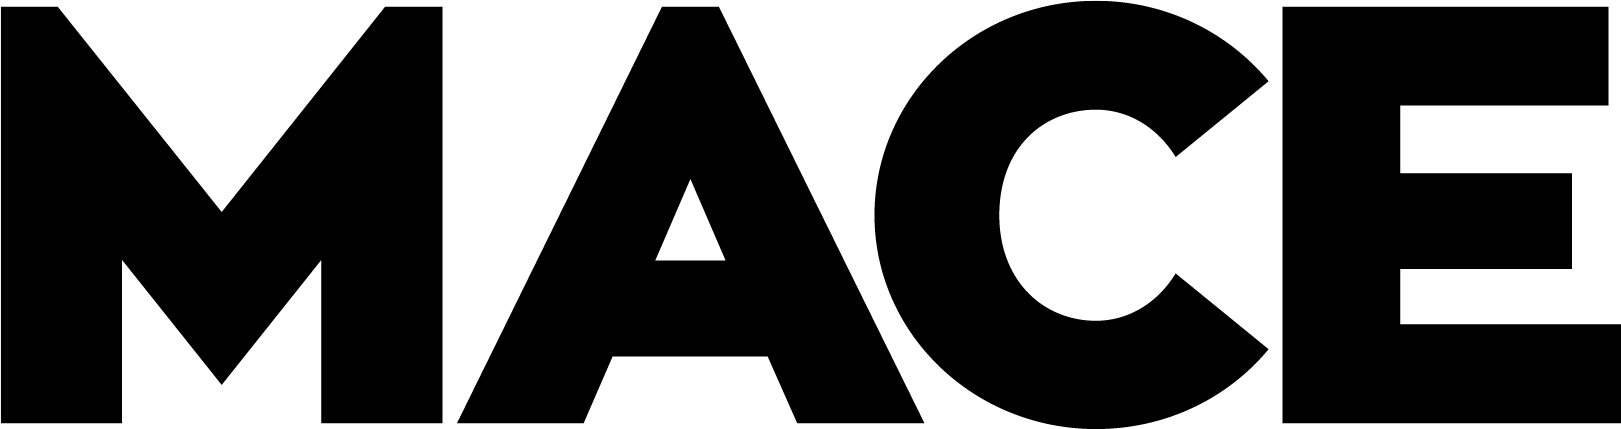 MACE Black logo